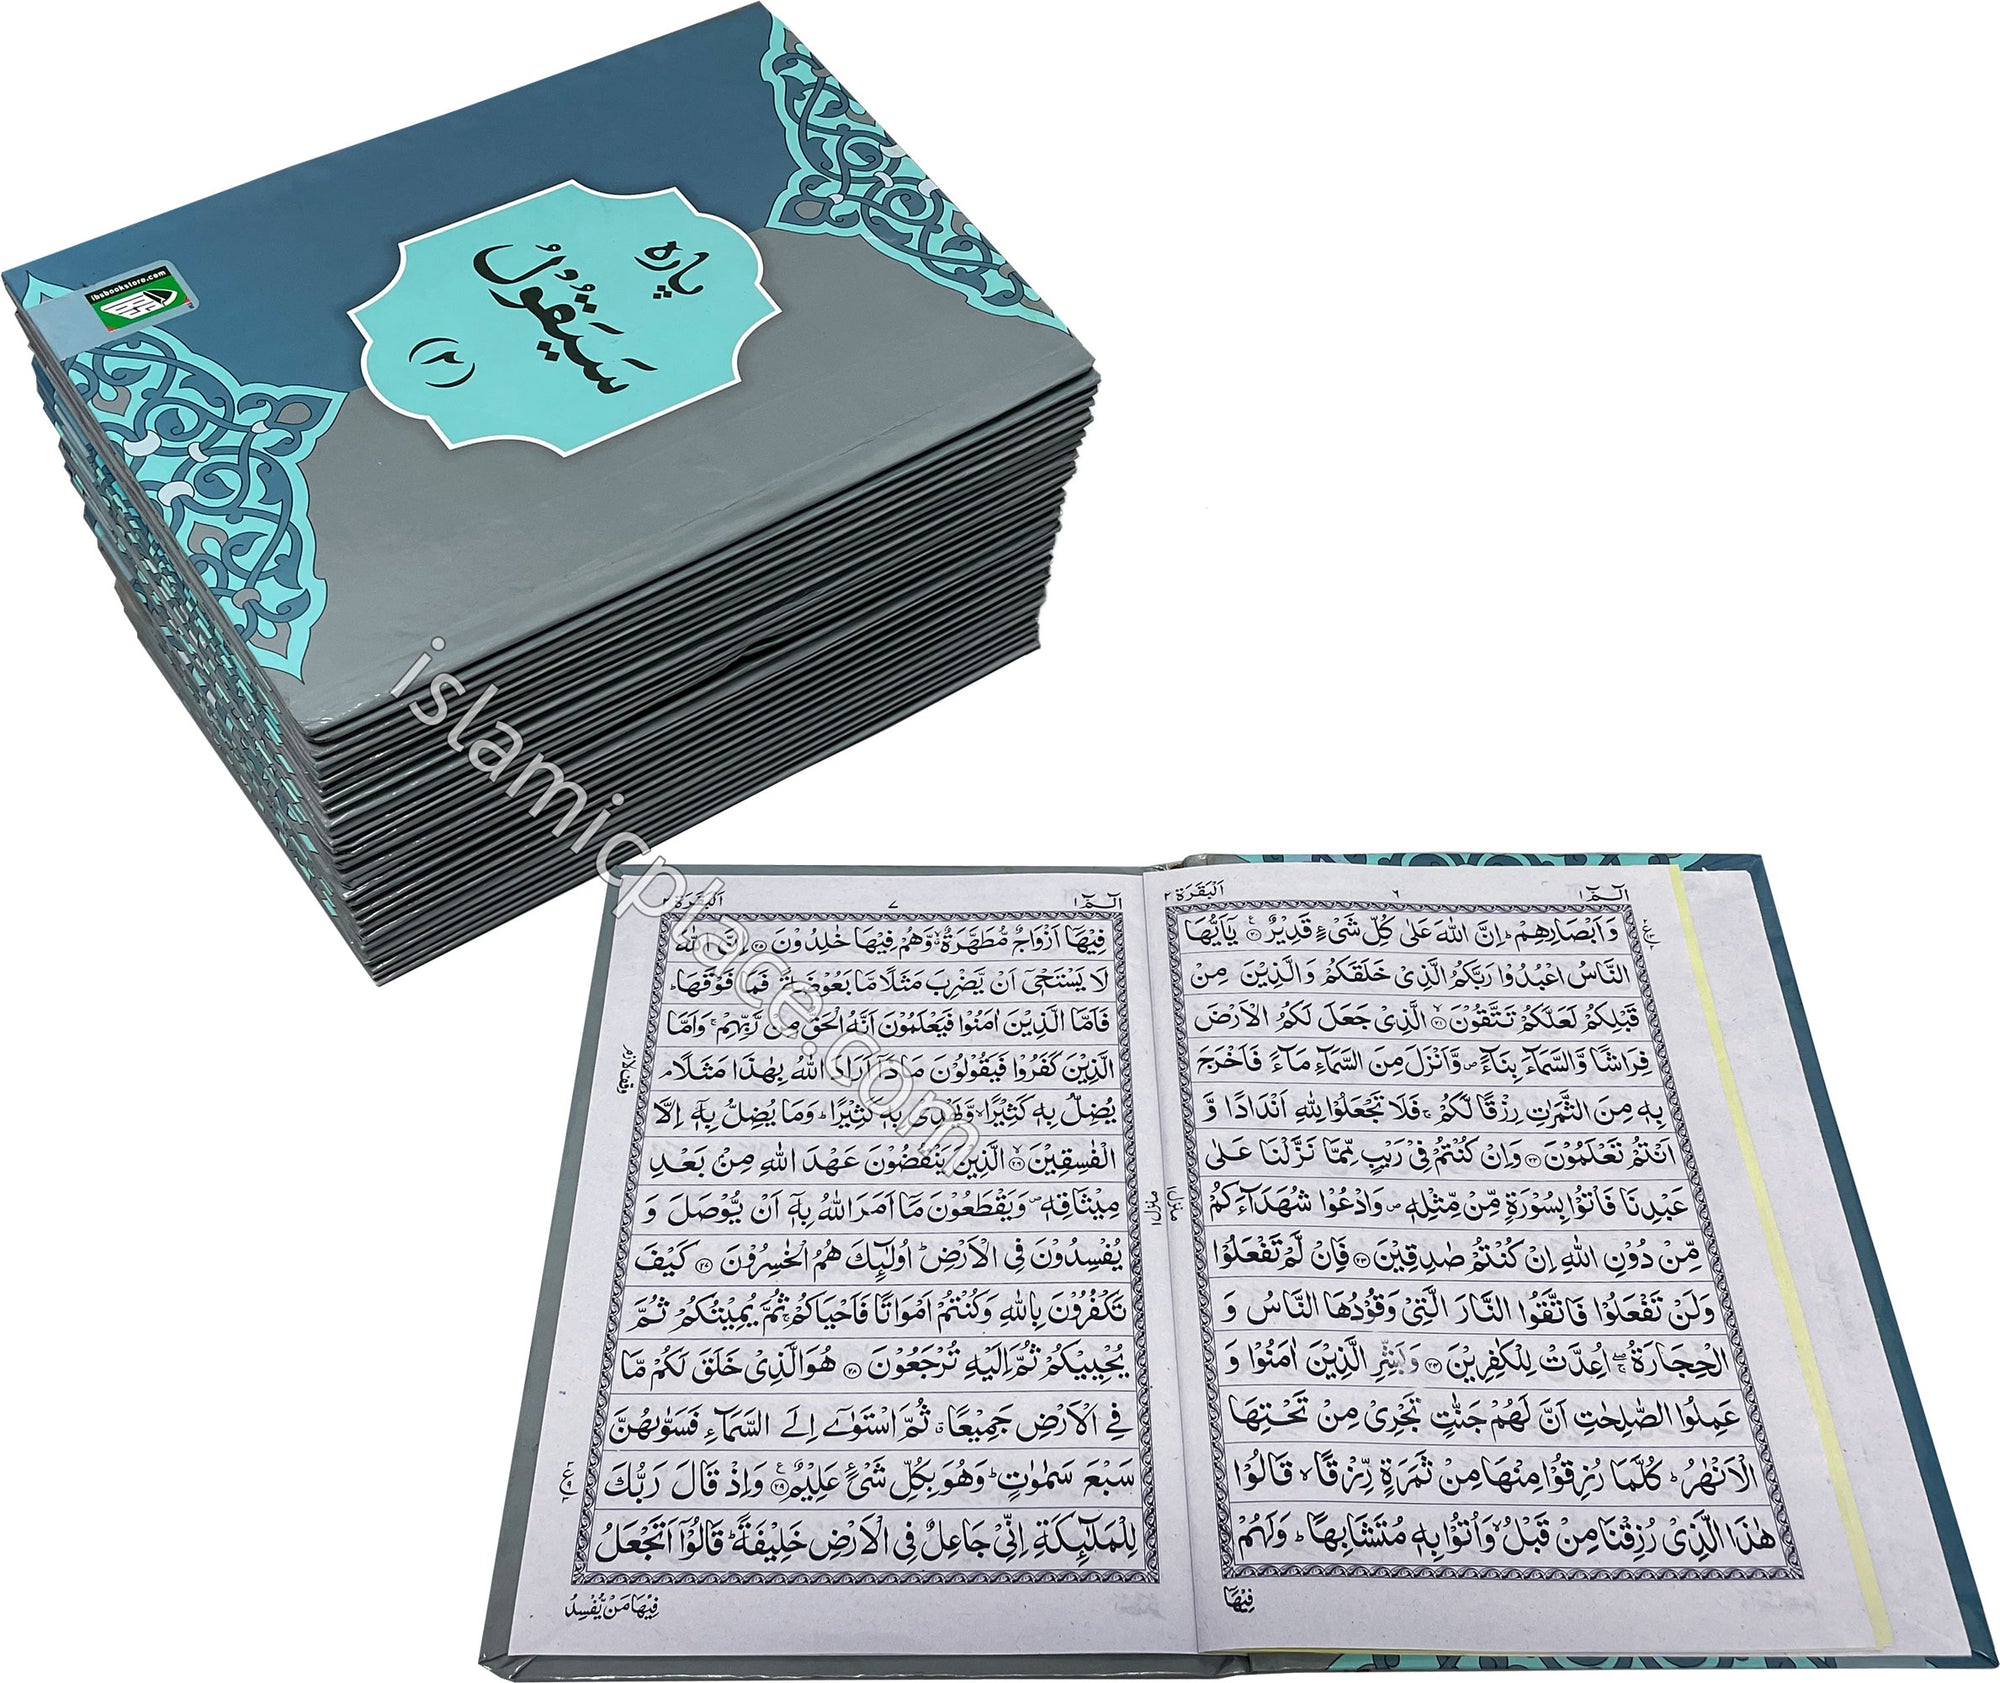 [30 vol set] Arabic: Quran Mushaf IndoPak Persian script 30 Part set (7.5" x 10") Hardback (Ref# 3) 13 line